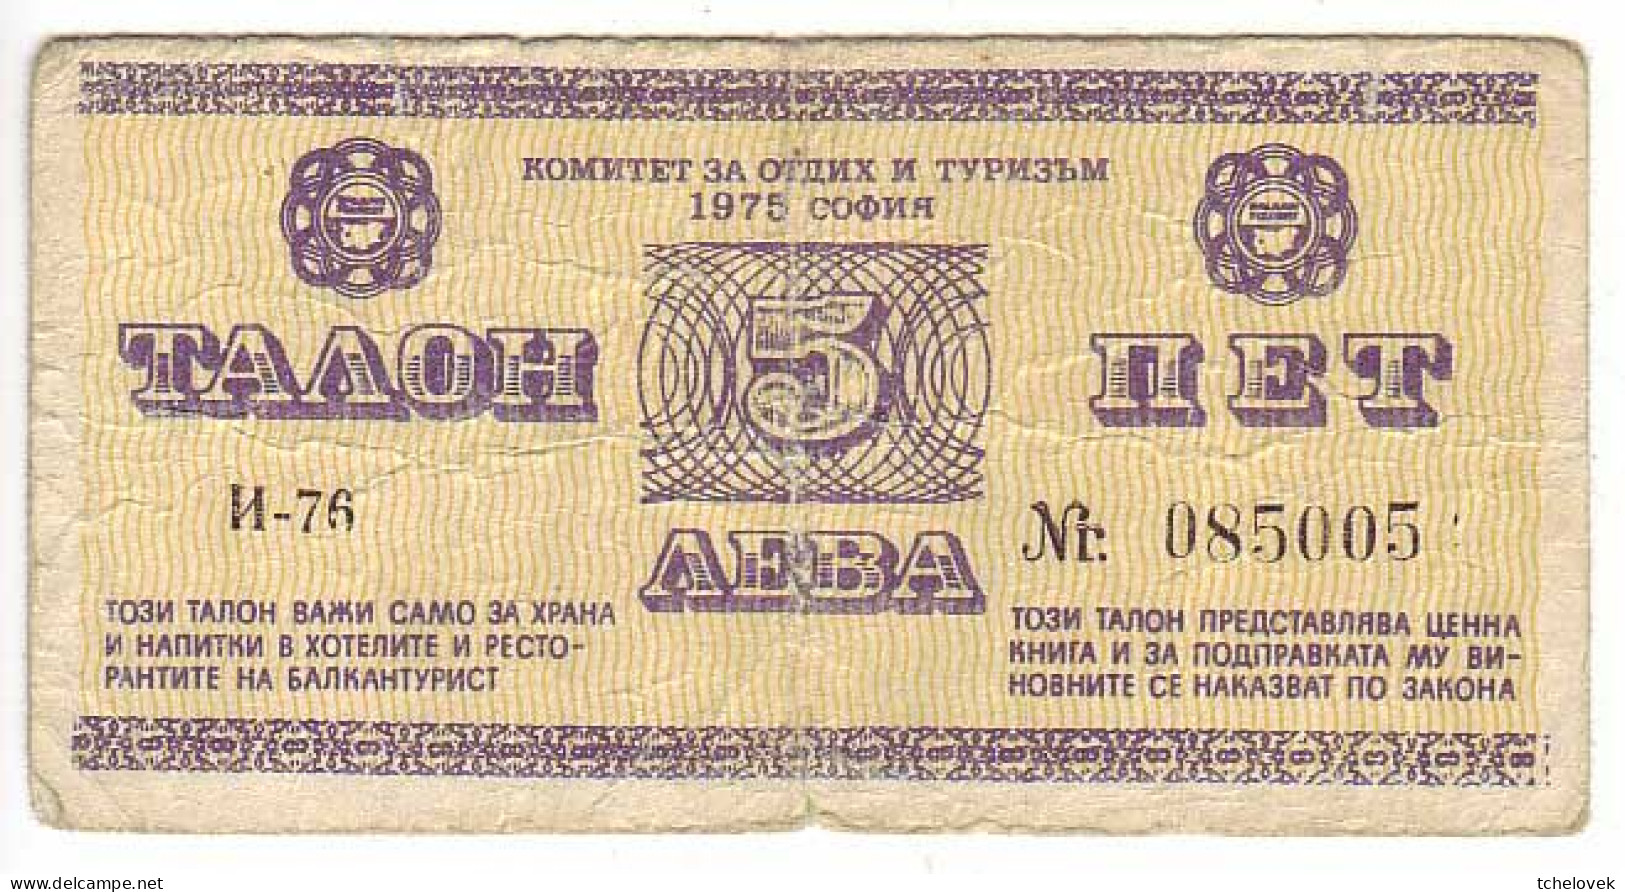 (Billets). Bulgarie Bulgaria. Foreing Exchange Certificate. Rare. Balkan Tourist. 1975. 5 Leva Serie I-76 N° 085005 - Bulgarie